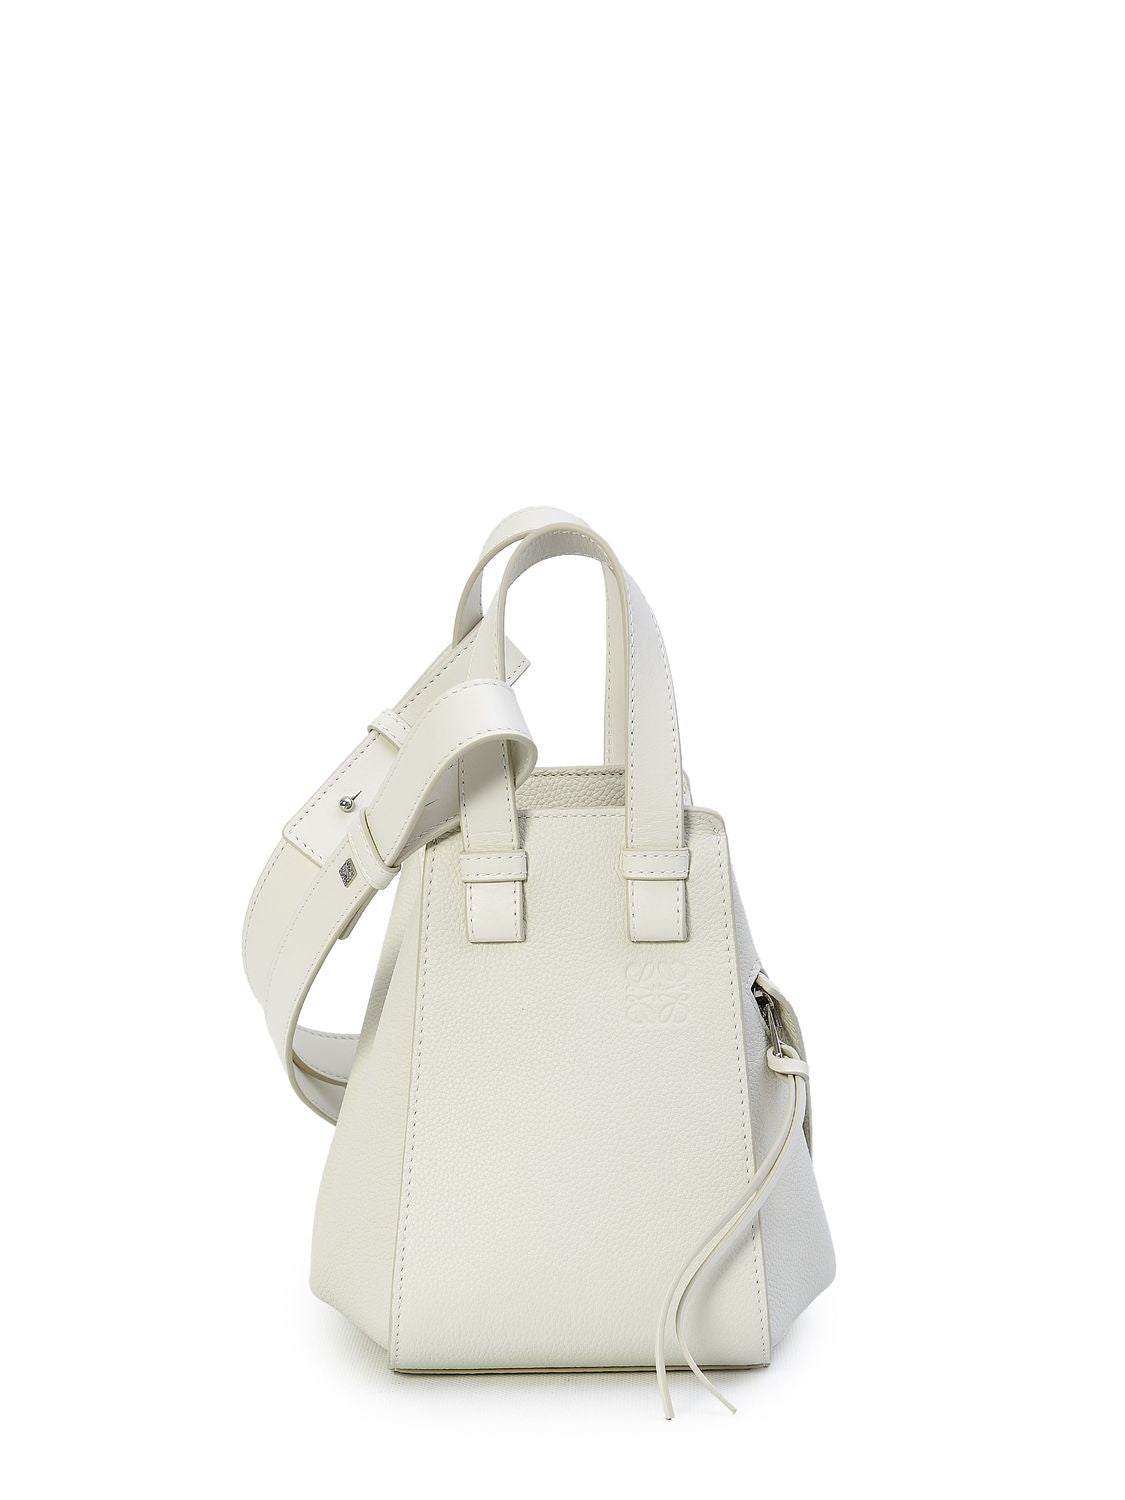 LOEWE Compact Hammock Handbag in Soft White Grained Calfskin with Embossed Anagram for Women